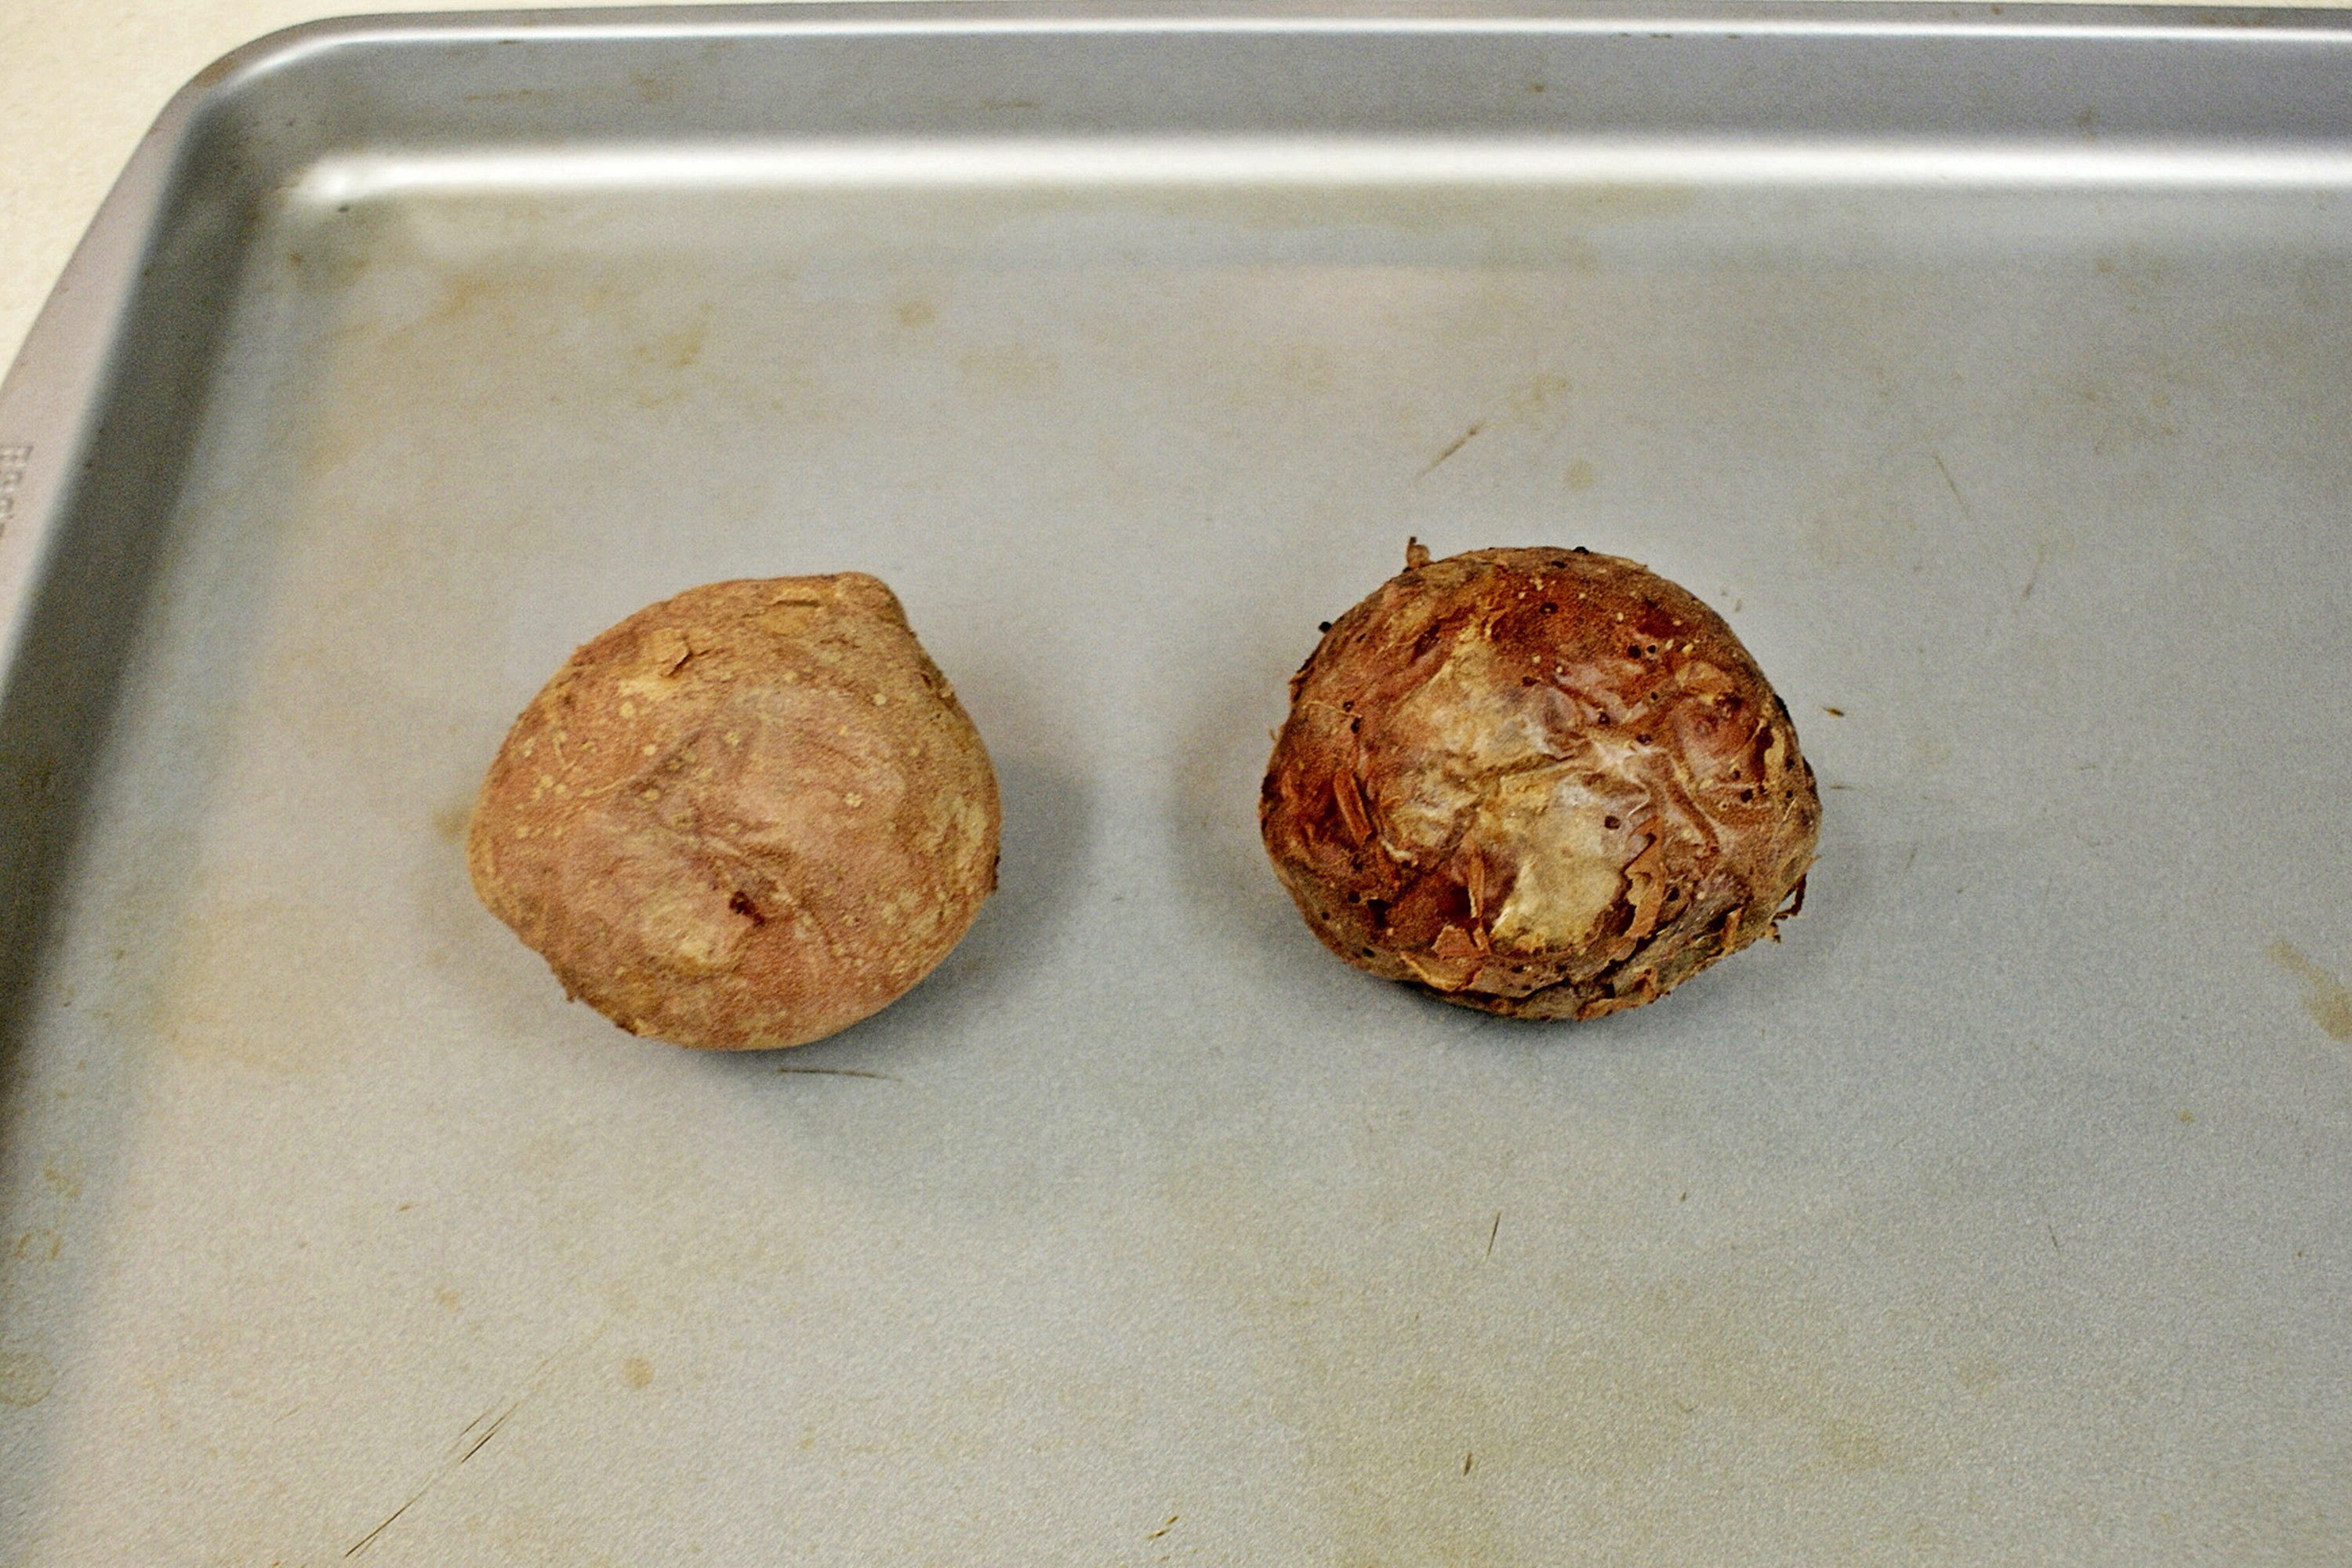 Reheating Baked Potato
 How to Reheat Baked Potatoes Safely